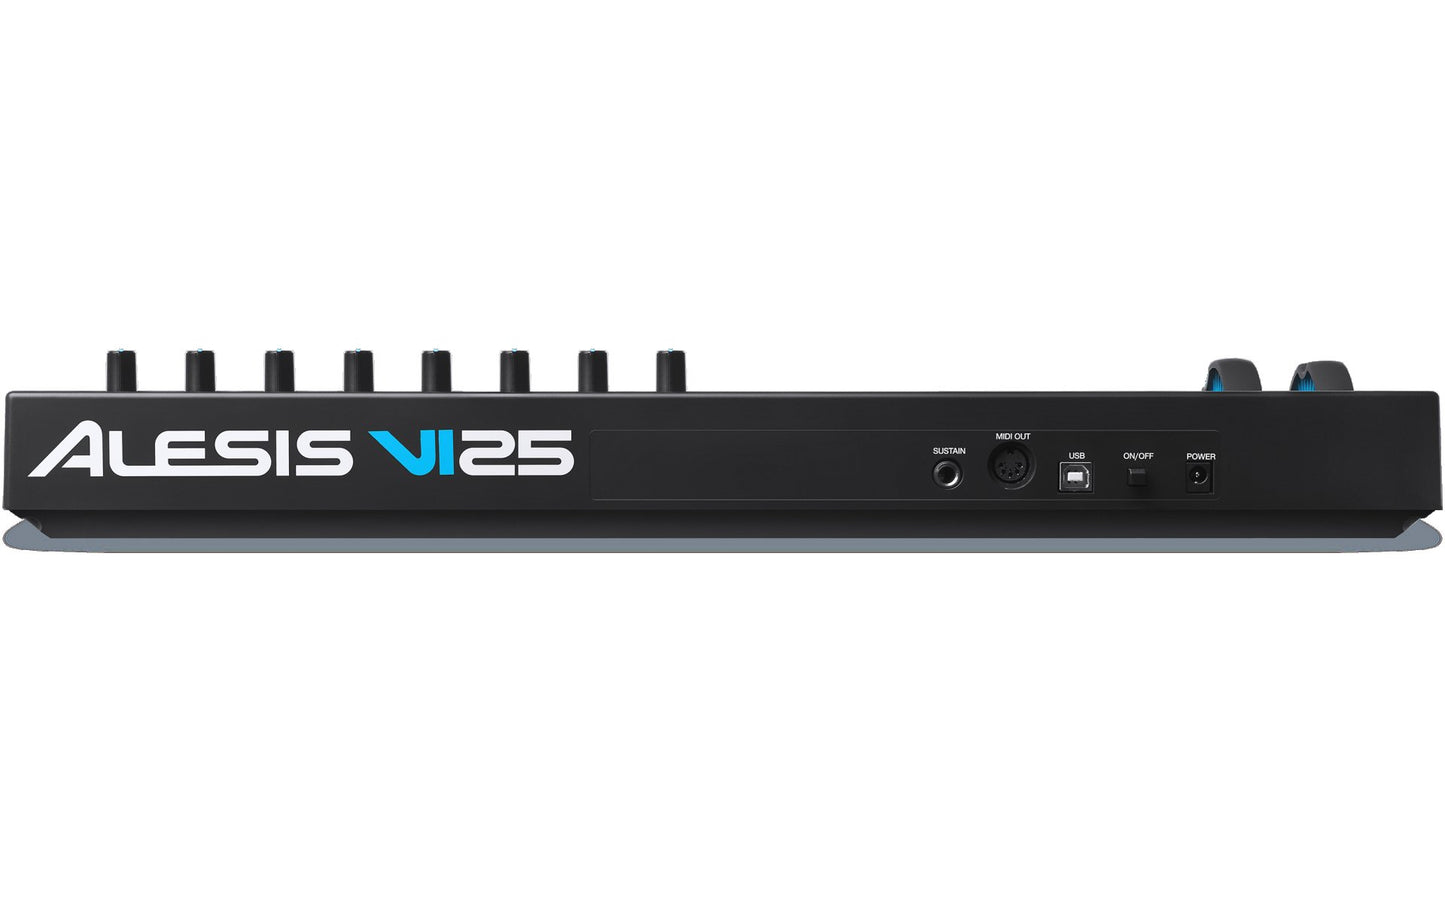 Alesis VI25 Advanced 25-Key USB MIDI Drum Pad and Keyboard Controller